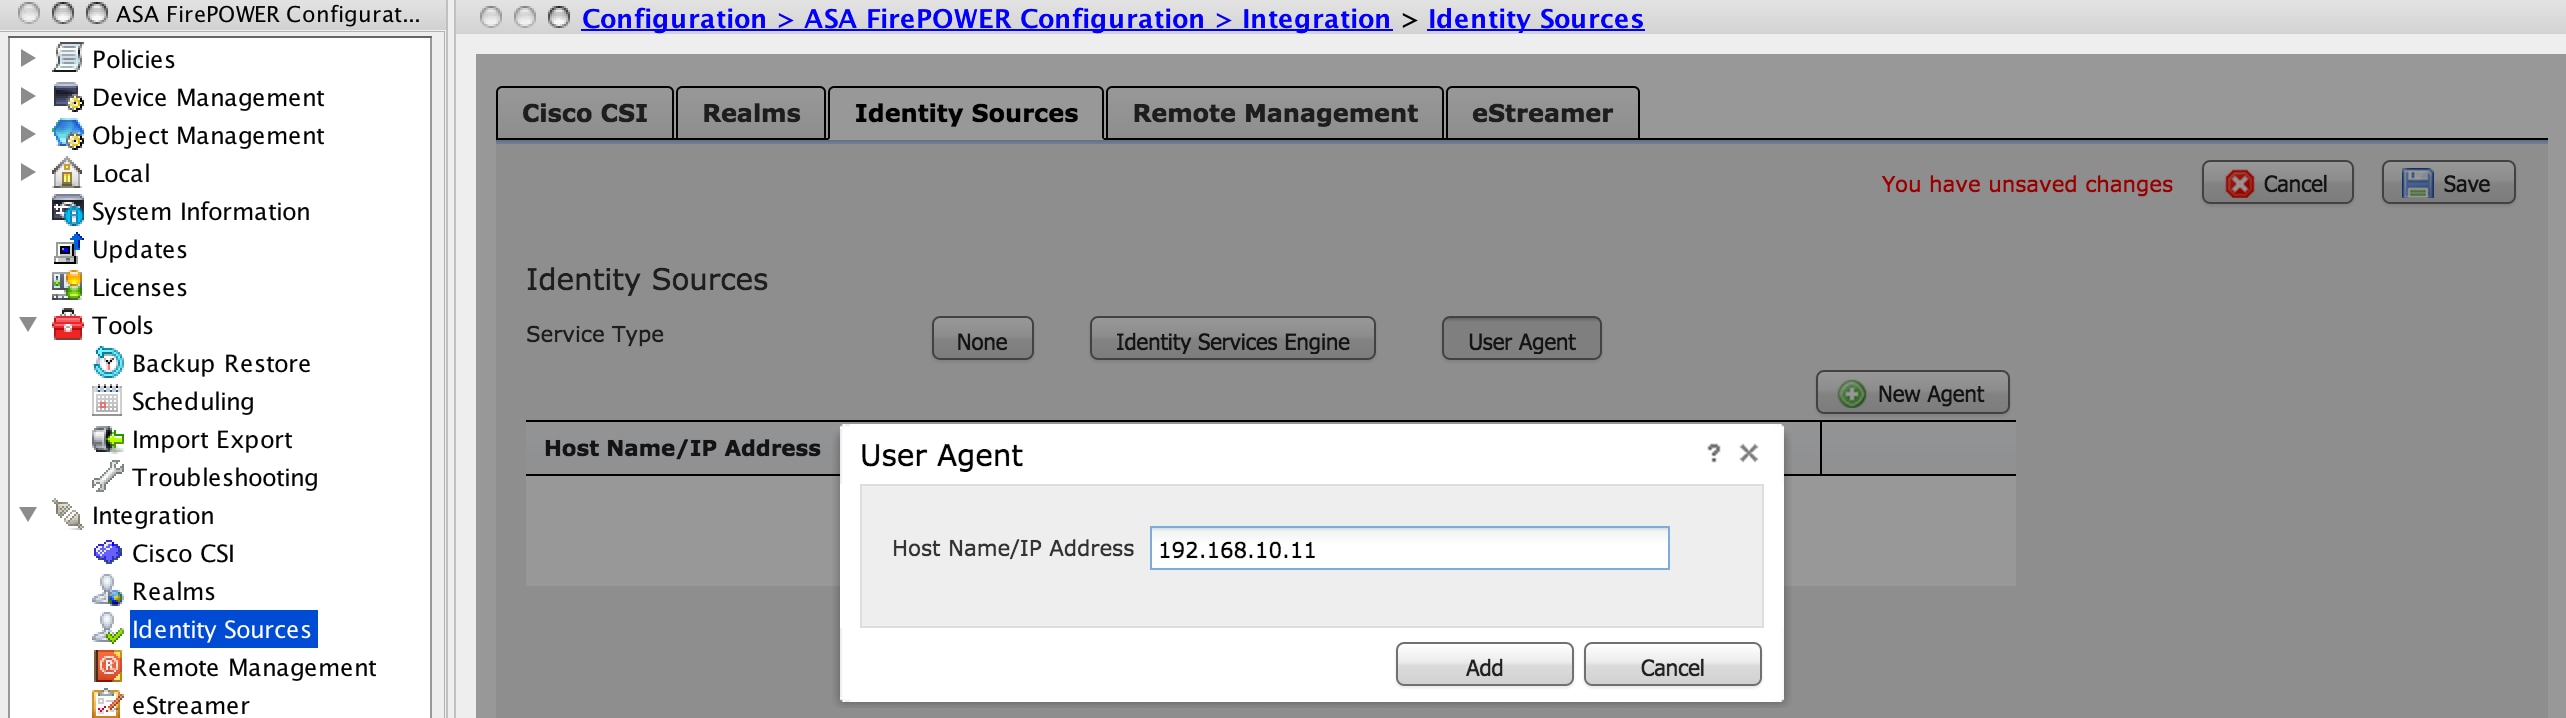 200566-Configure-Active-Directory-Integration-w-00.png